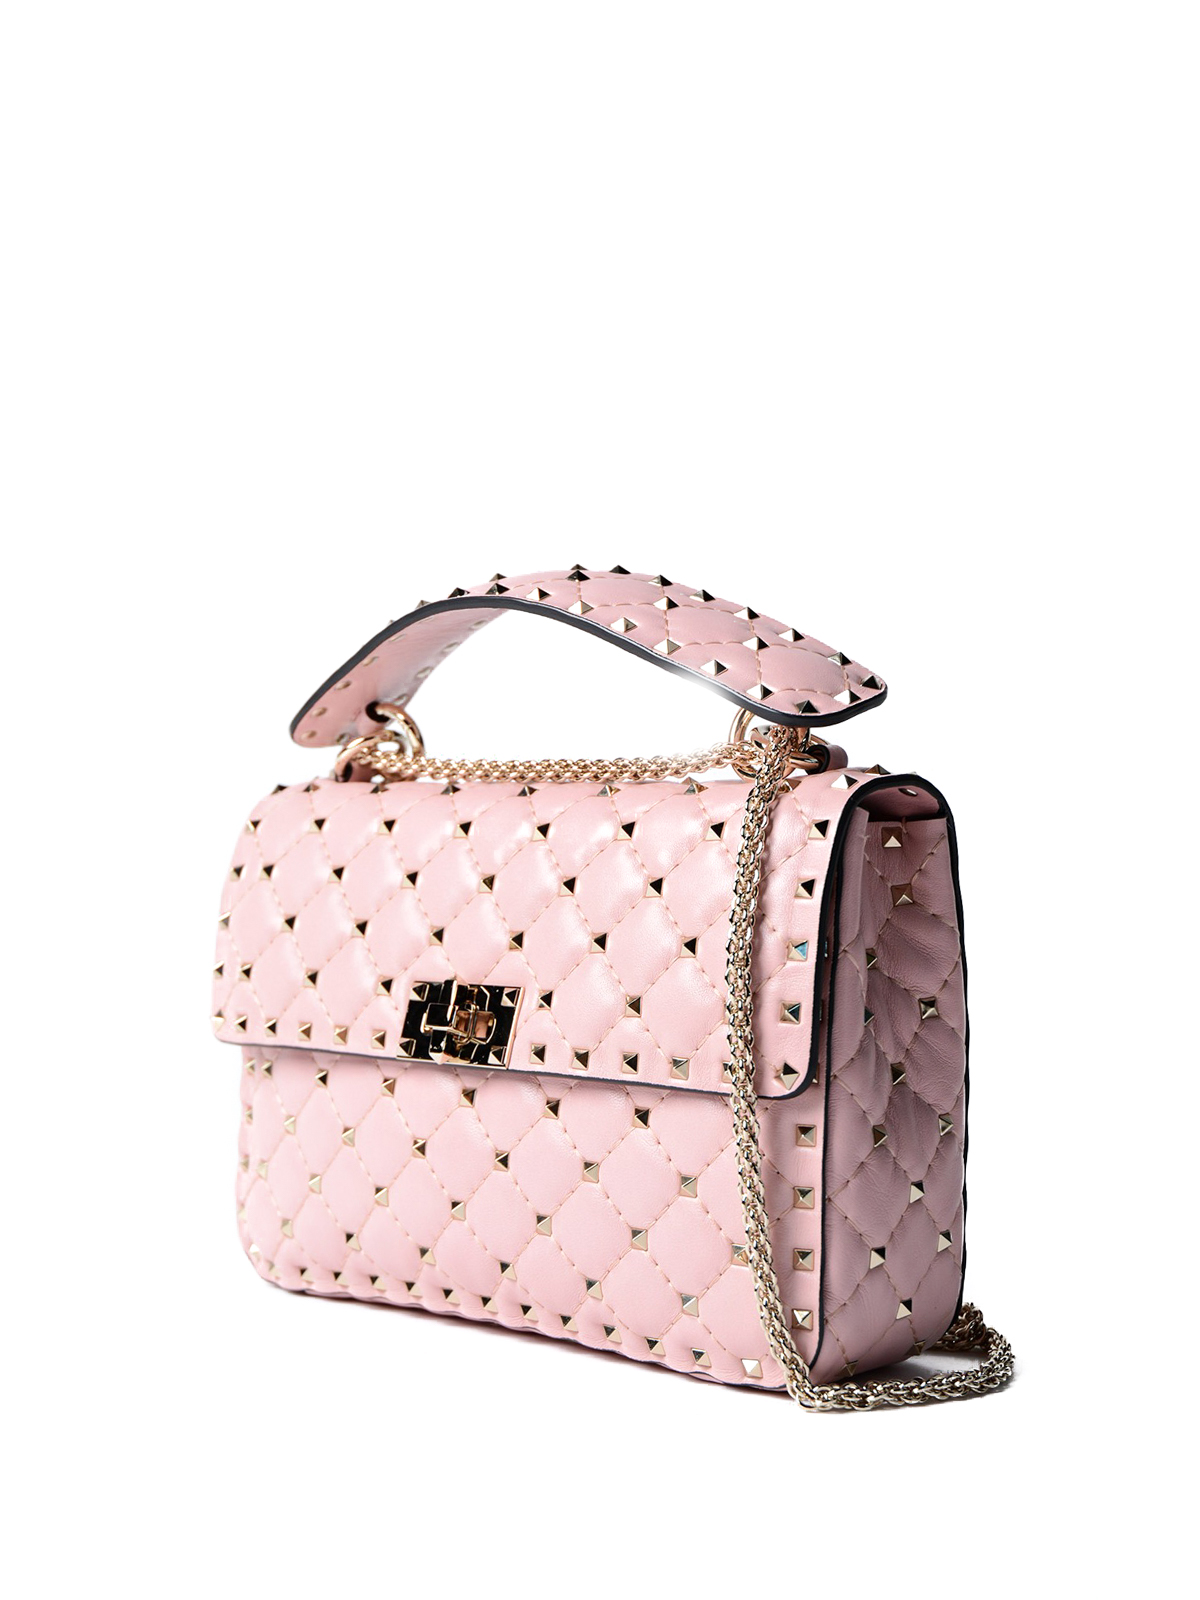 Rockstud Medium Leather Tote Bag in Pink - Valentino Garavani